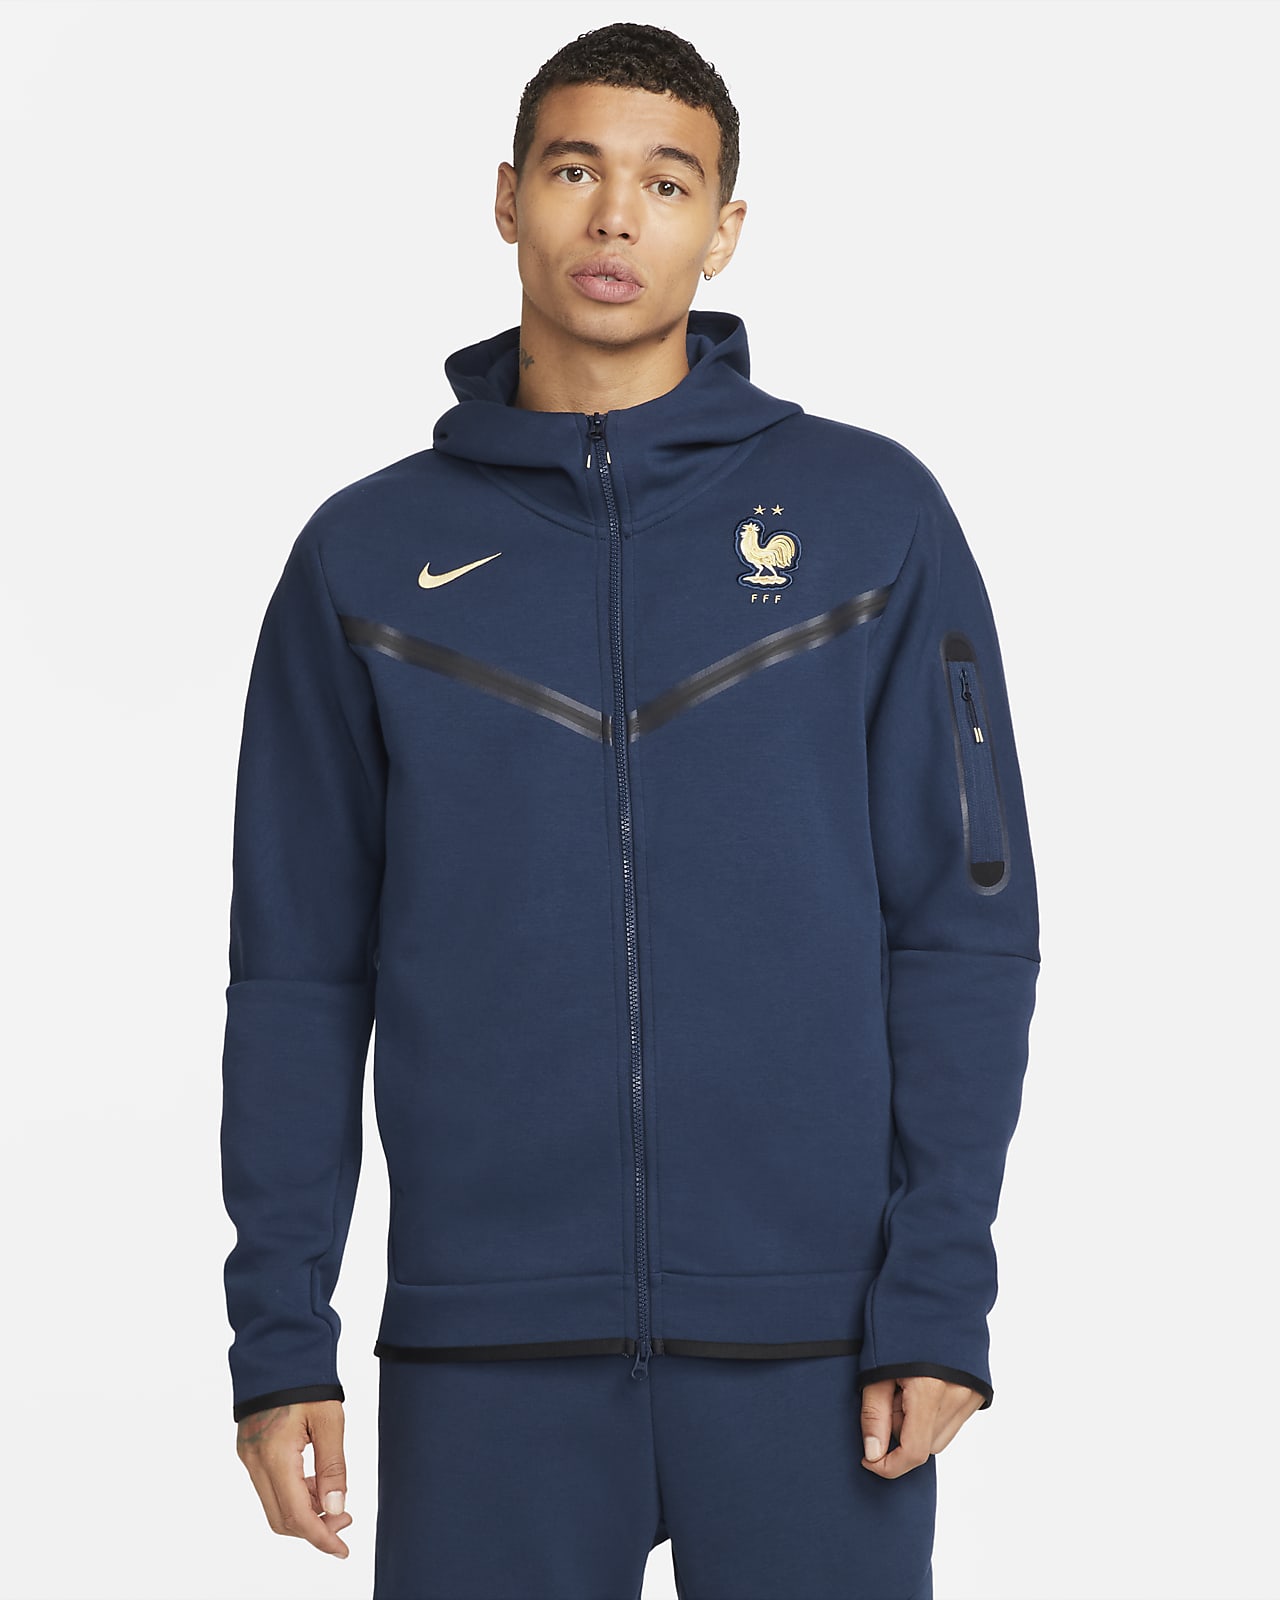 France Men's Nike Full-Zip Tech Fleece Hoodie